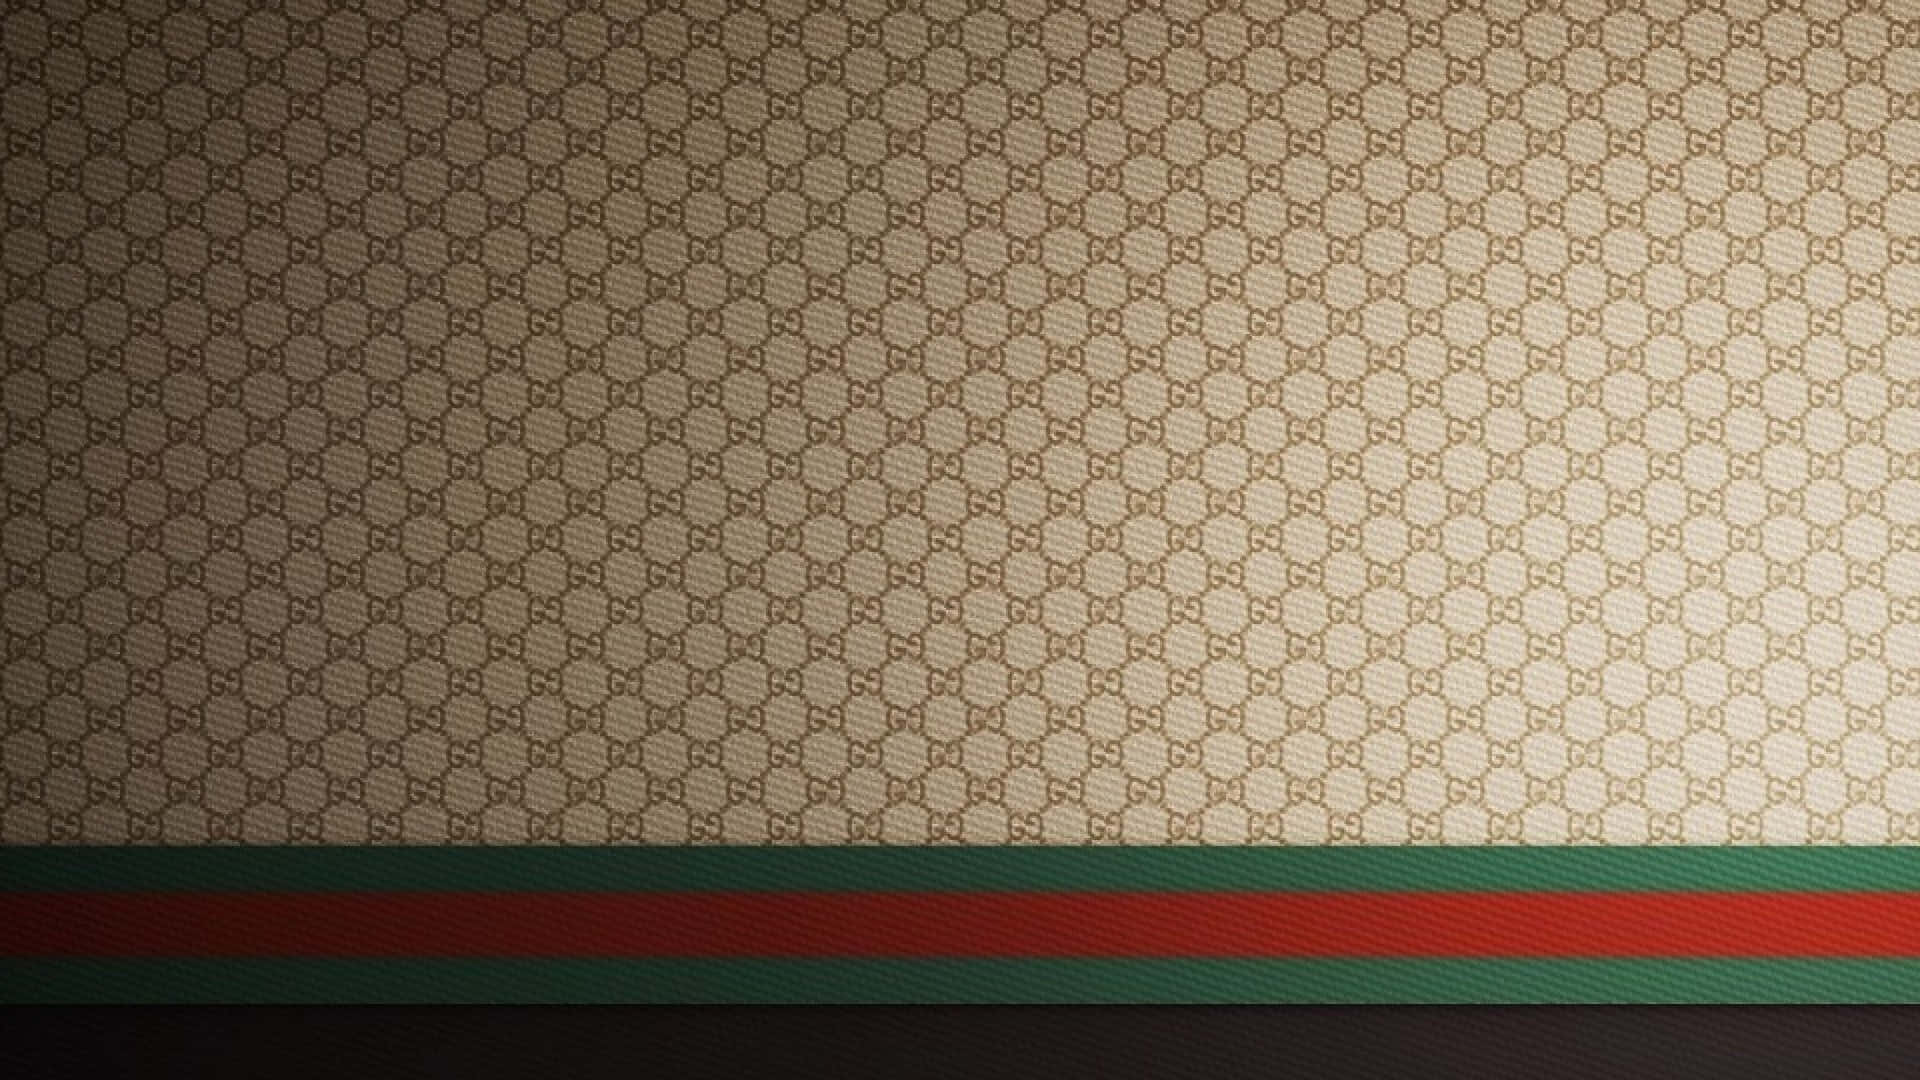 Tasteget Ut I Stil Med Gucci Grönt Som Skrivbordsbakgrund På Din Dator Eller Mobil. Wallpaper